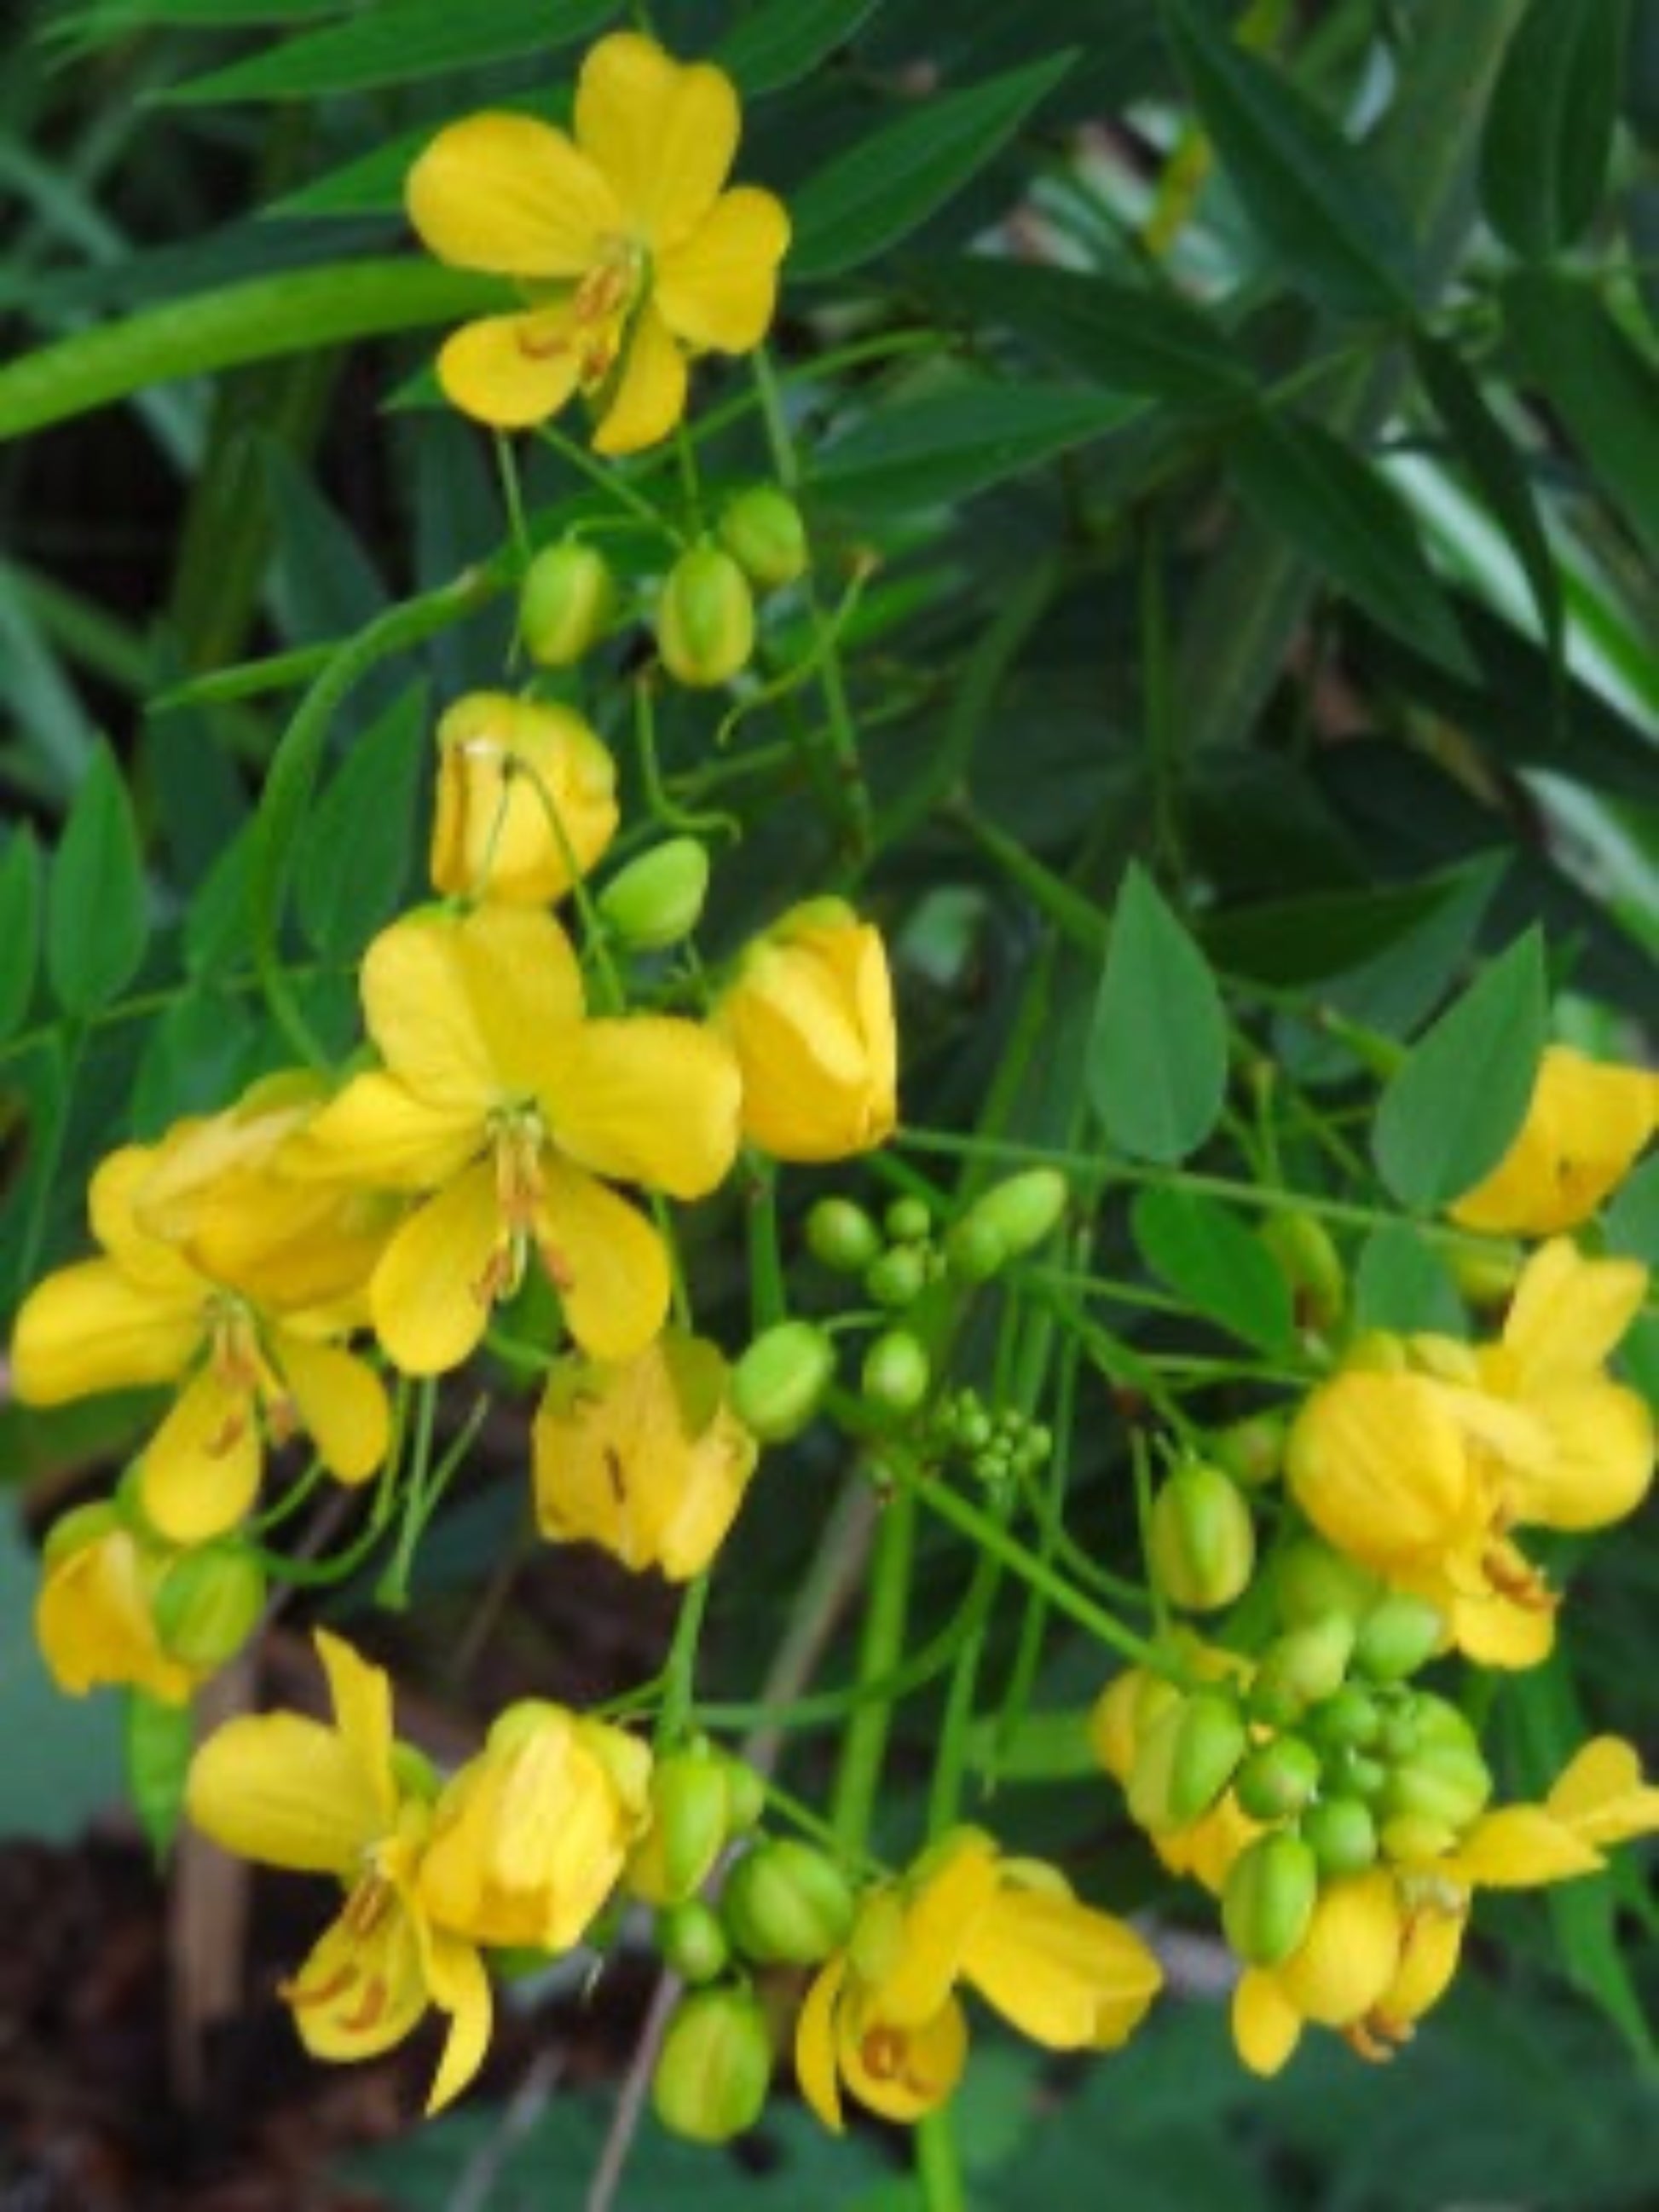 Senna Ligustrina " Privet Cassia" is the host plant for sulphur butterfly